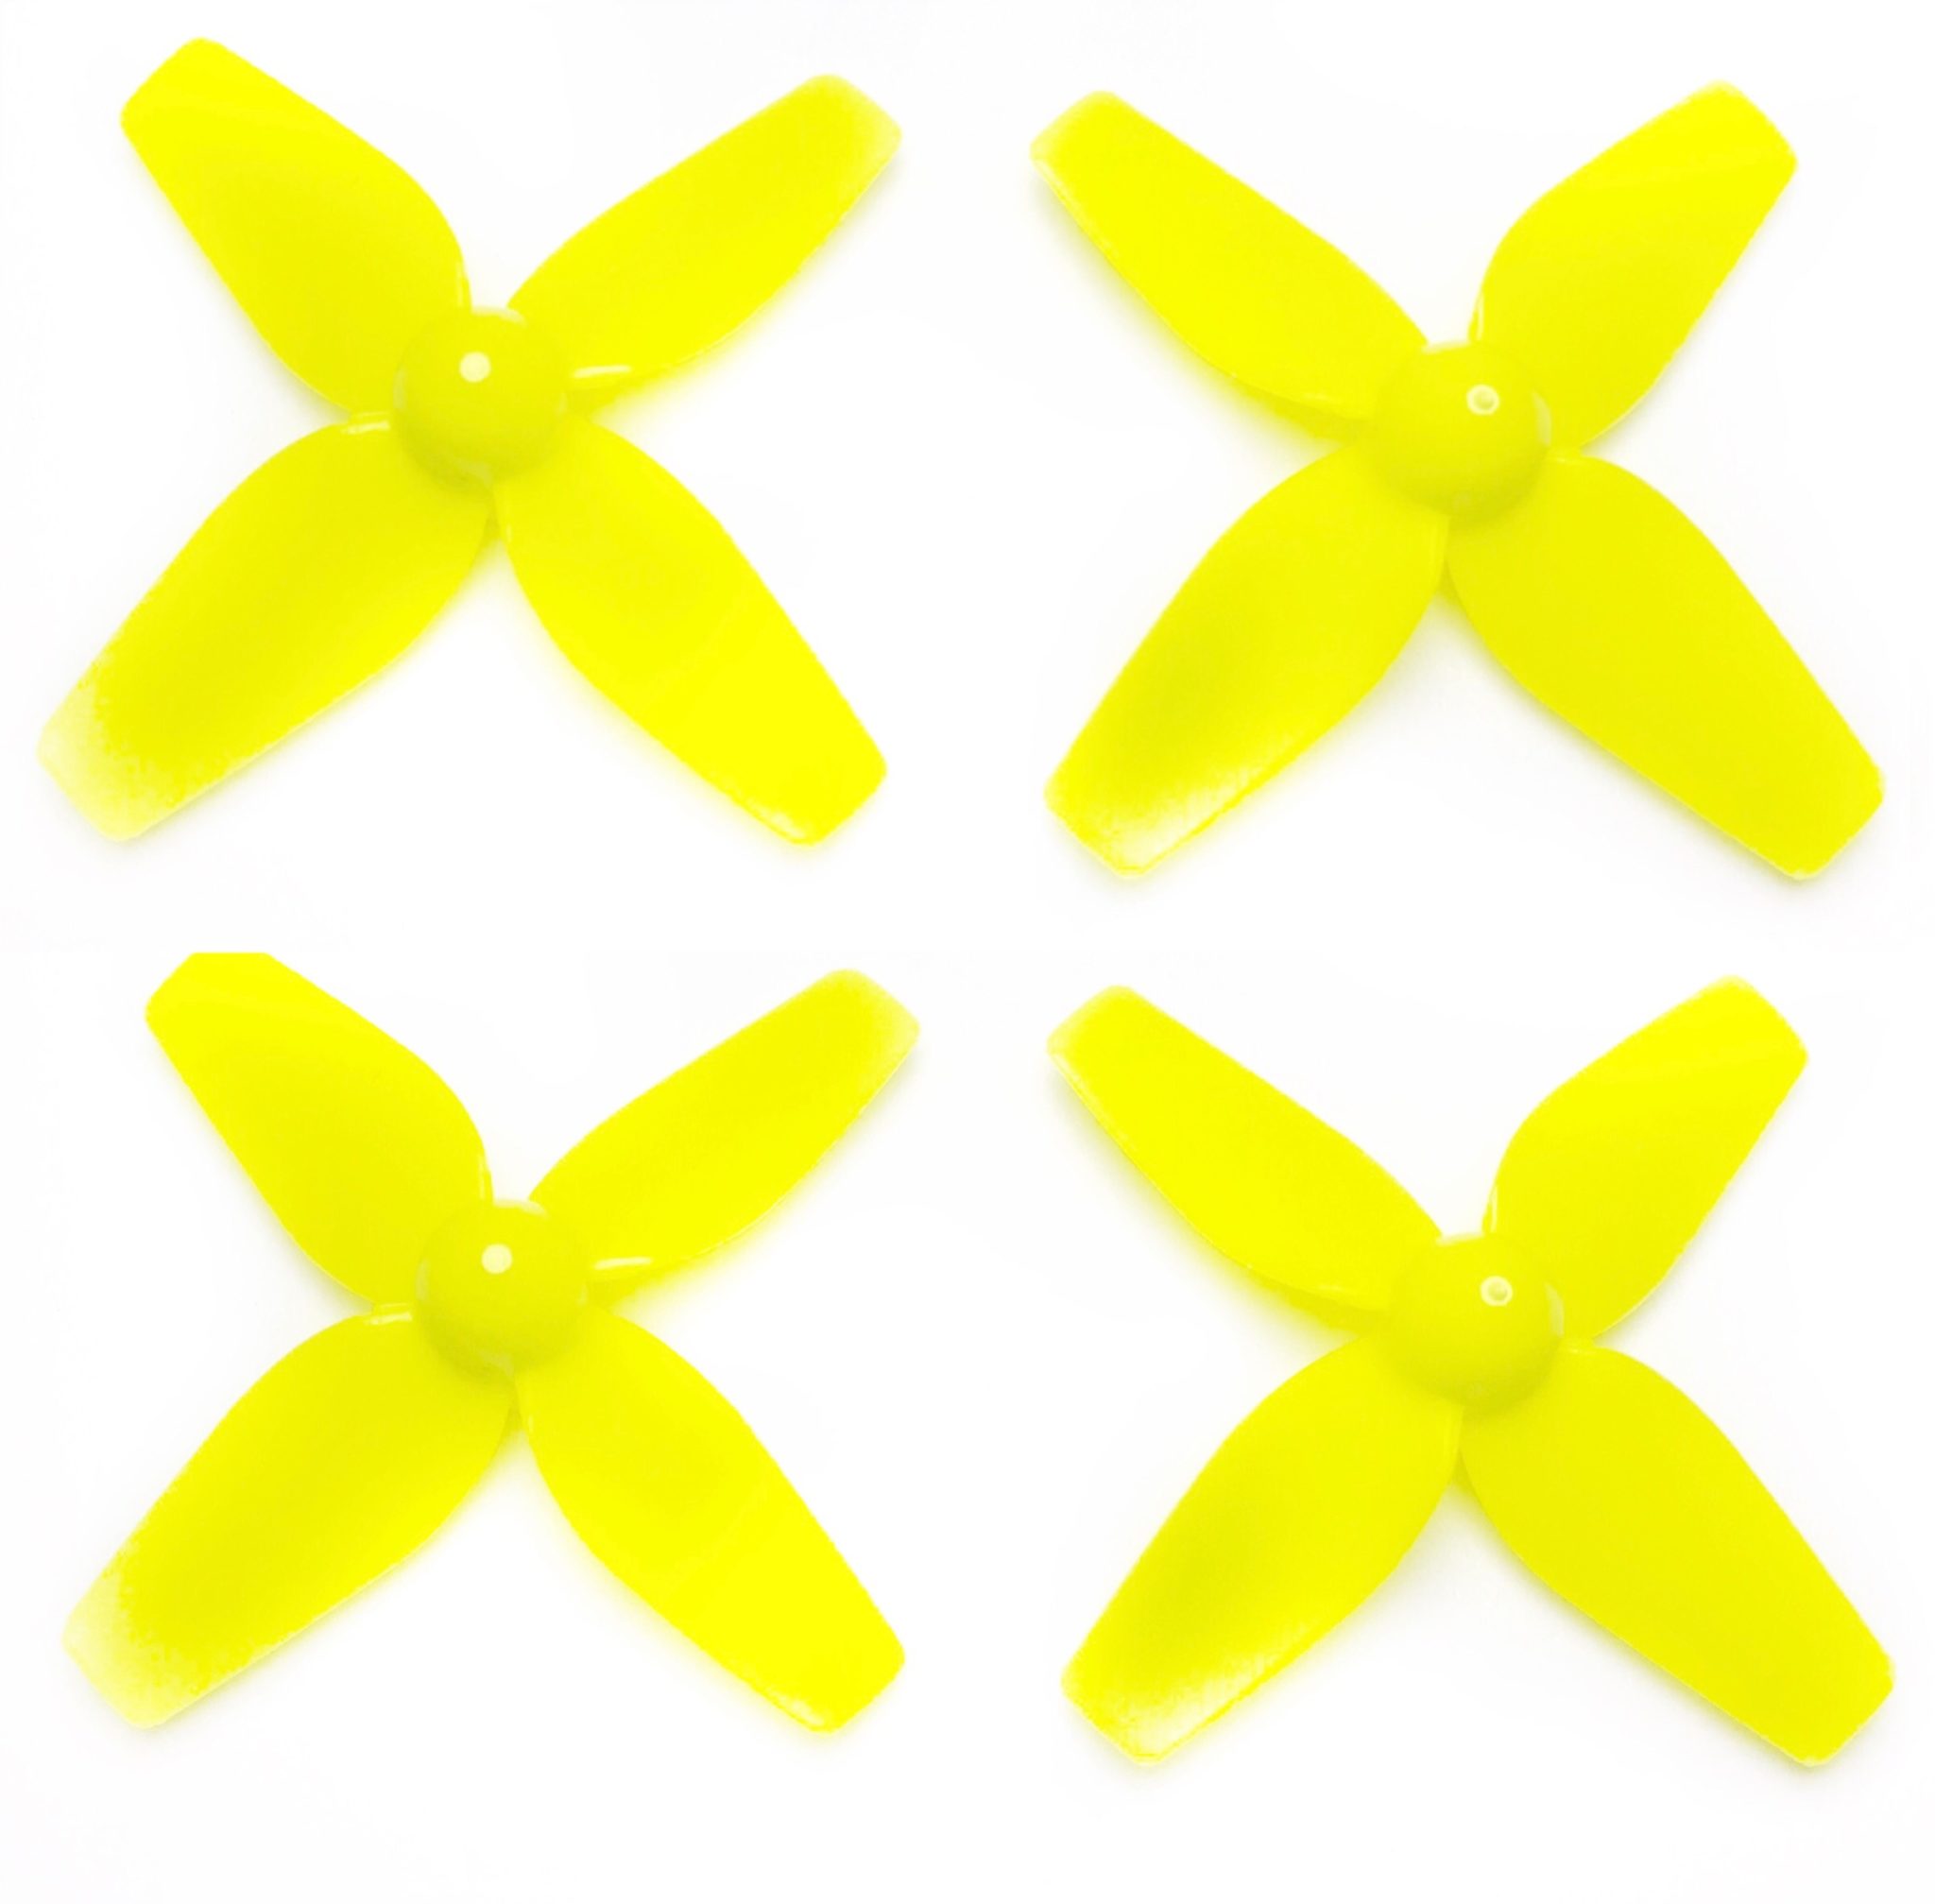 Eachine 41mm 4 Blades Propeller (2CW, 2CCW) Yellow